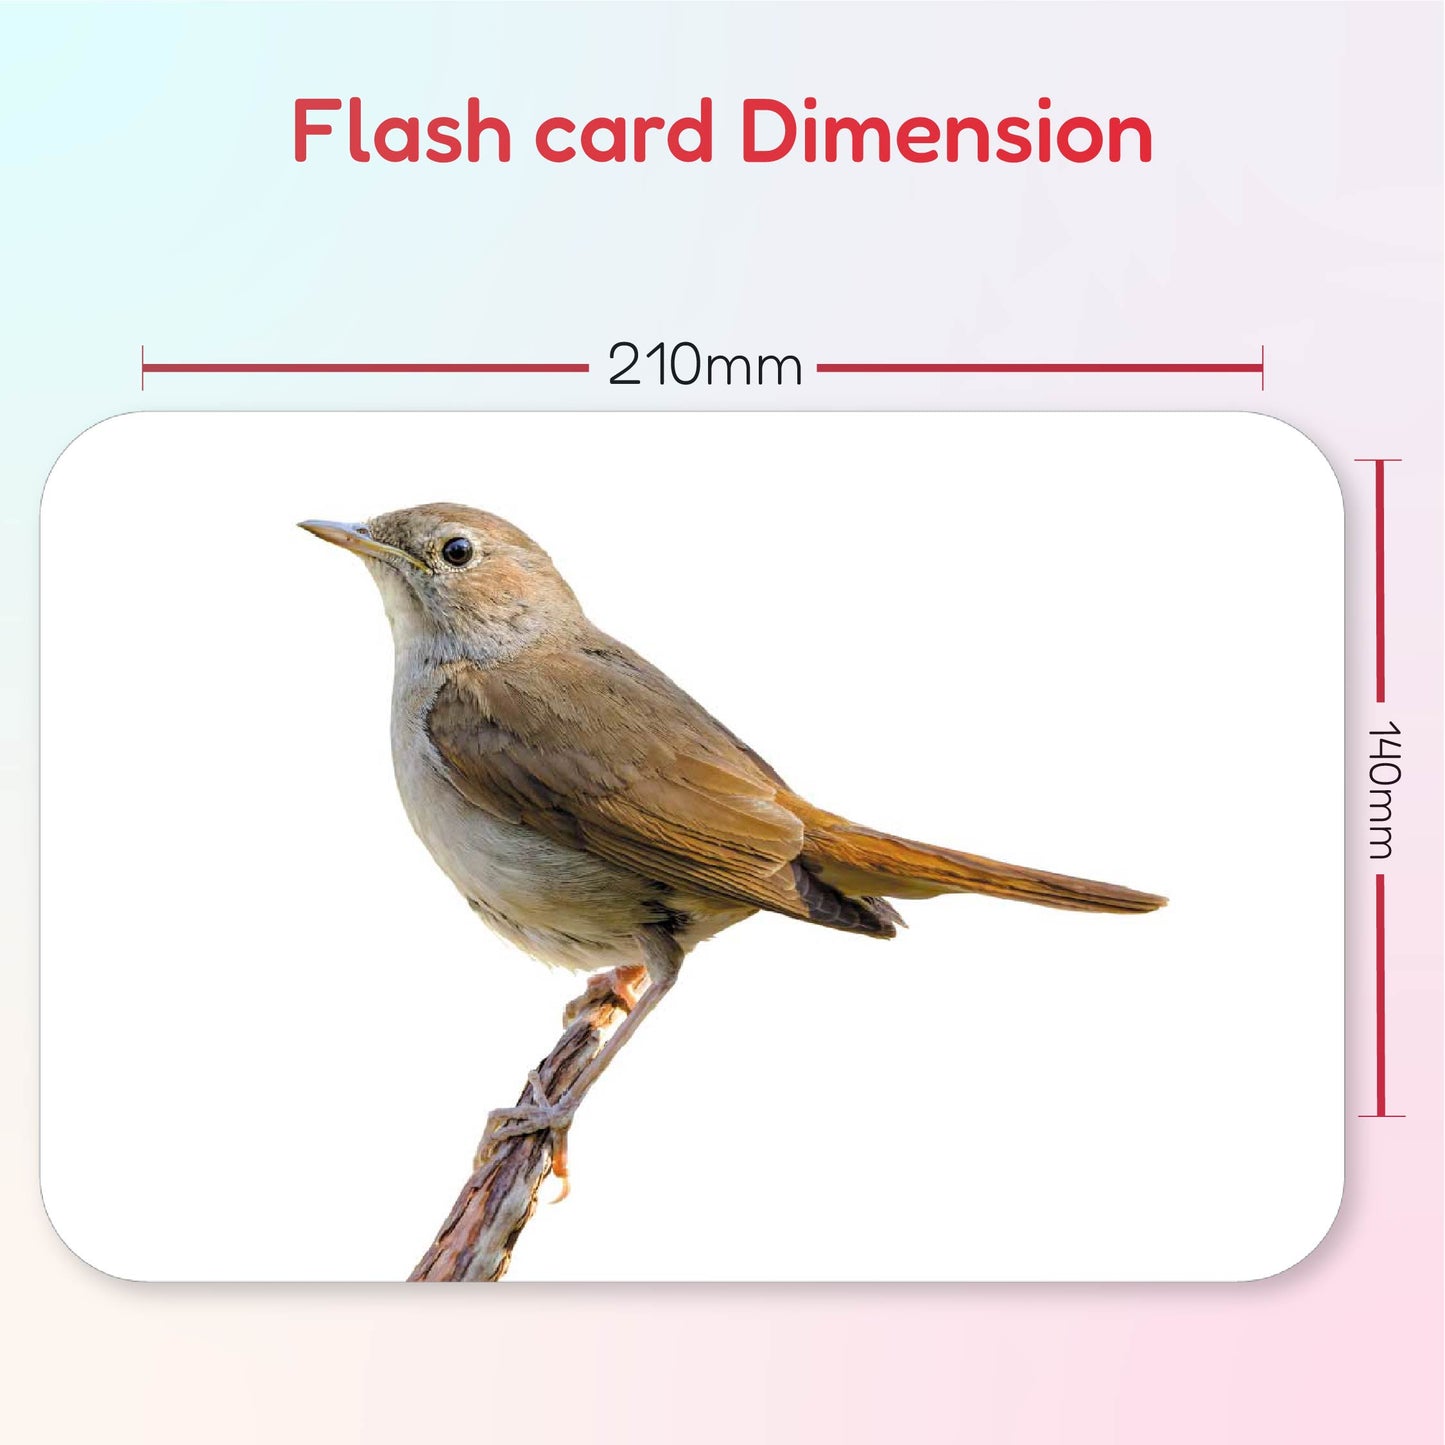 Hungry Brain Birds Flash Cards